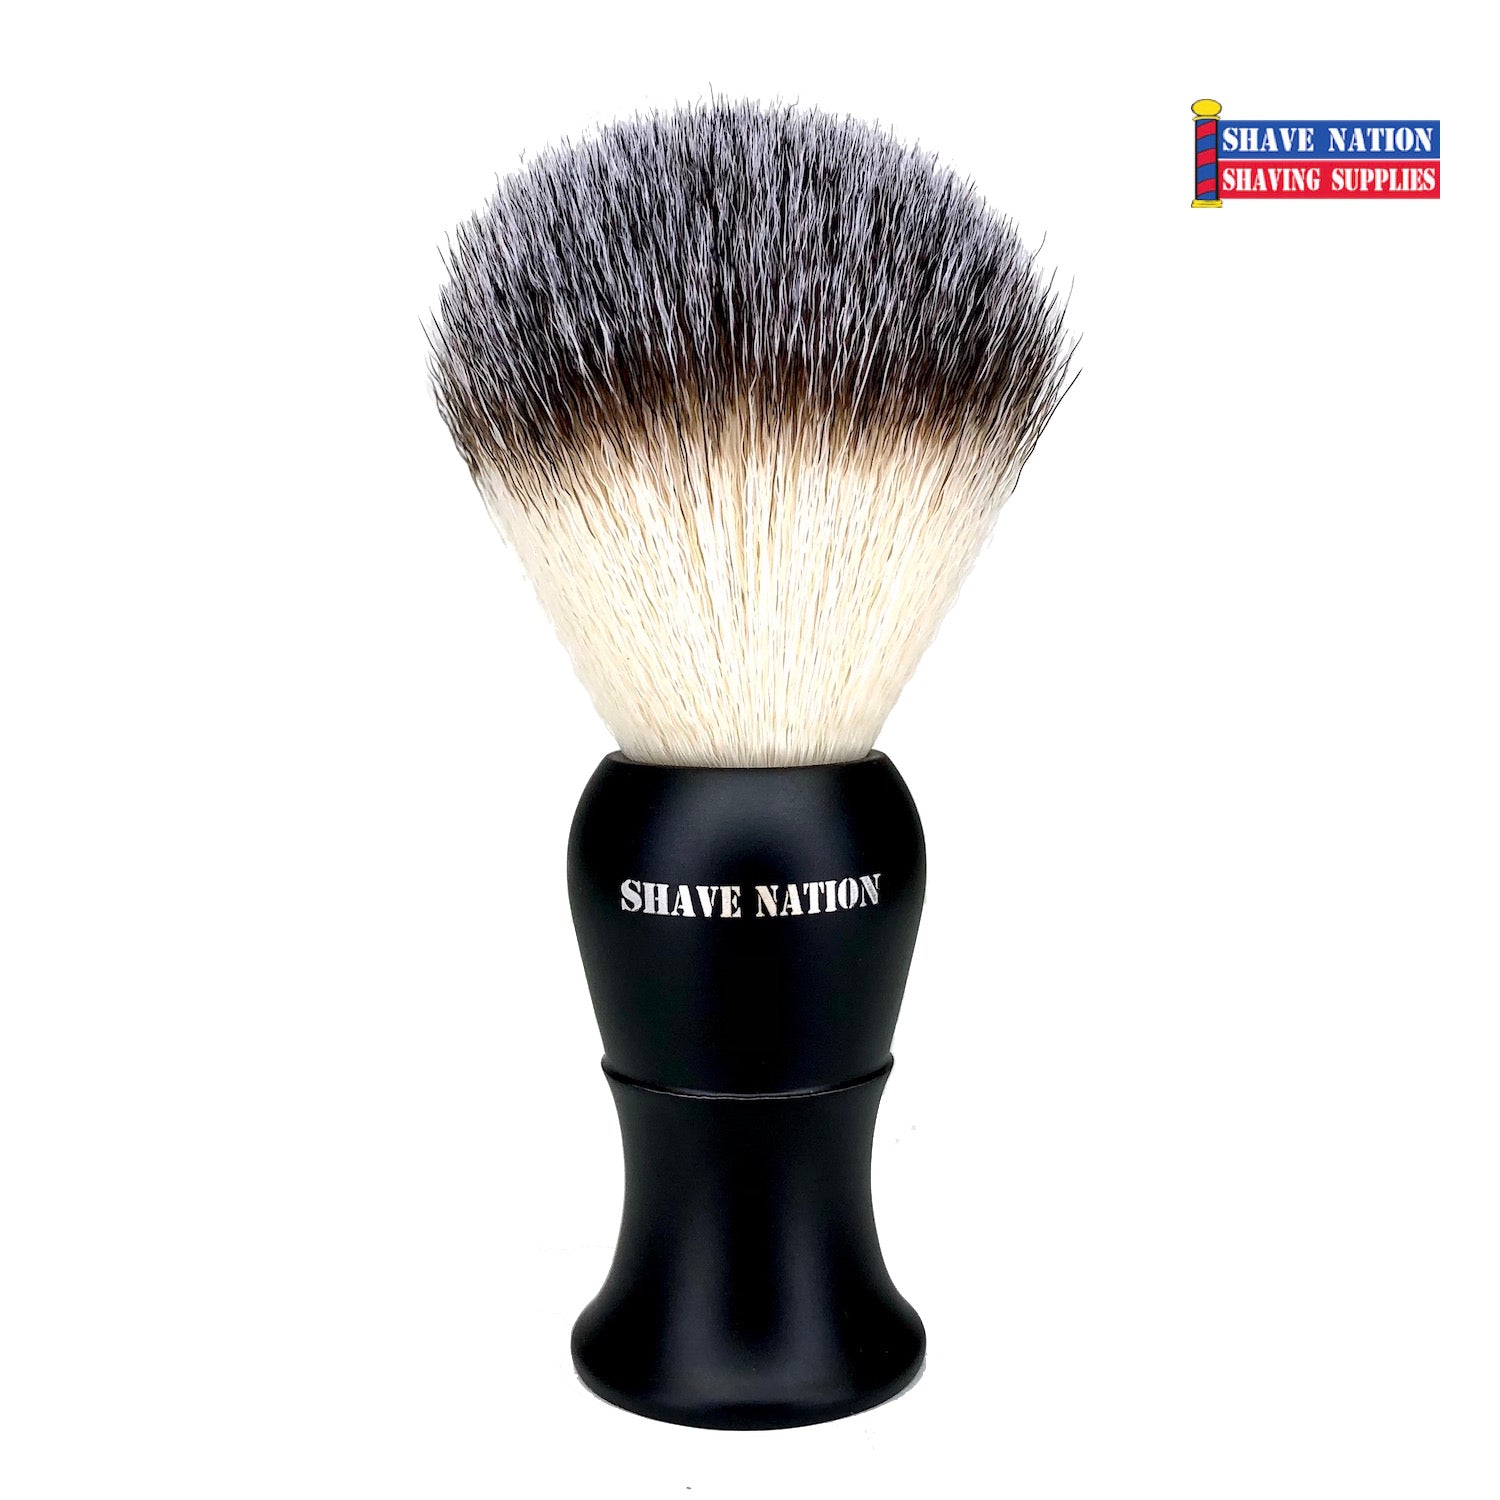 Shave Nation Satin Black Handle Synthetic Shaving Brush